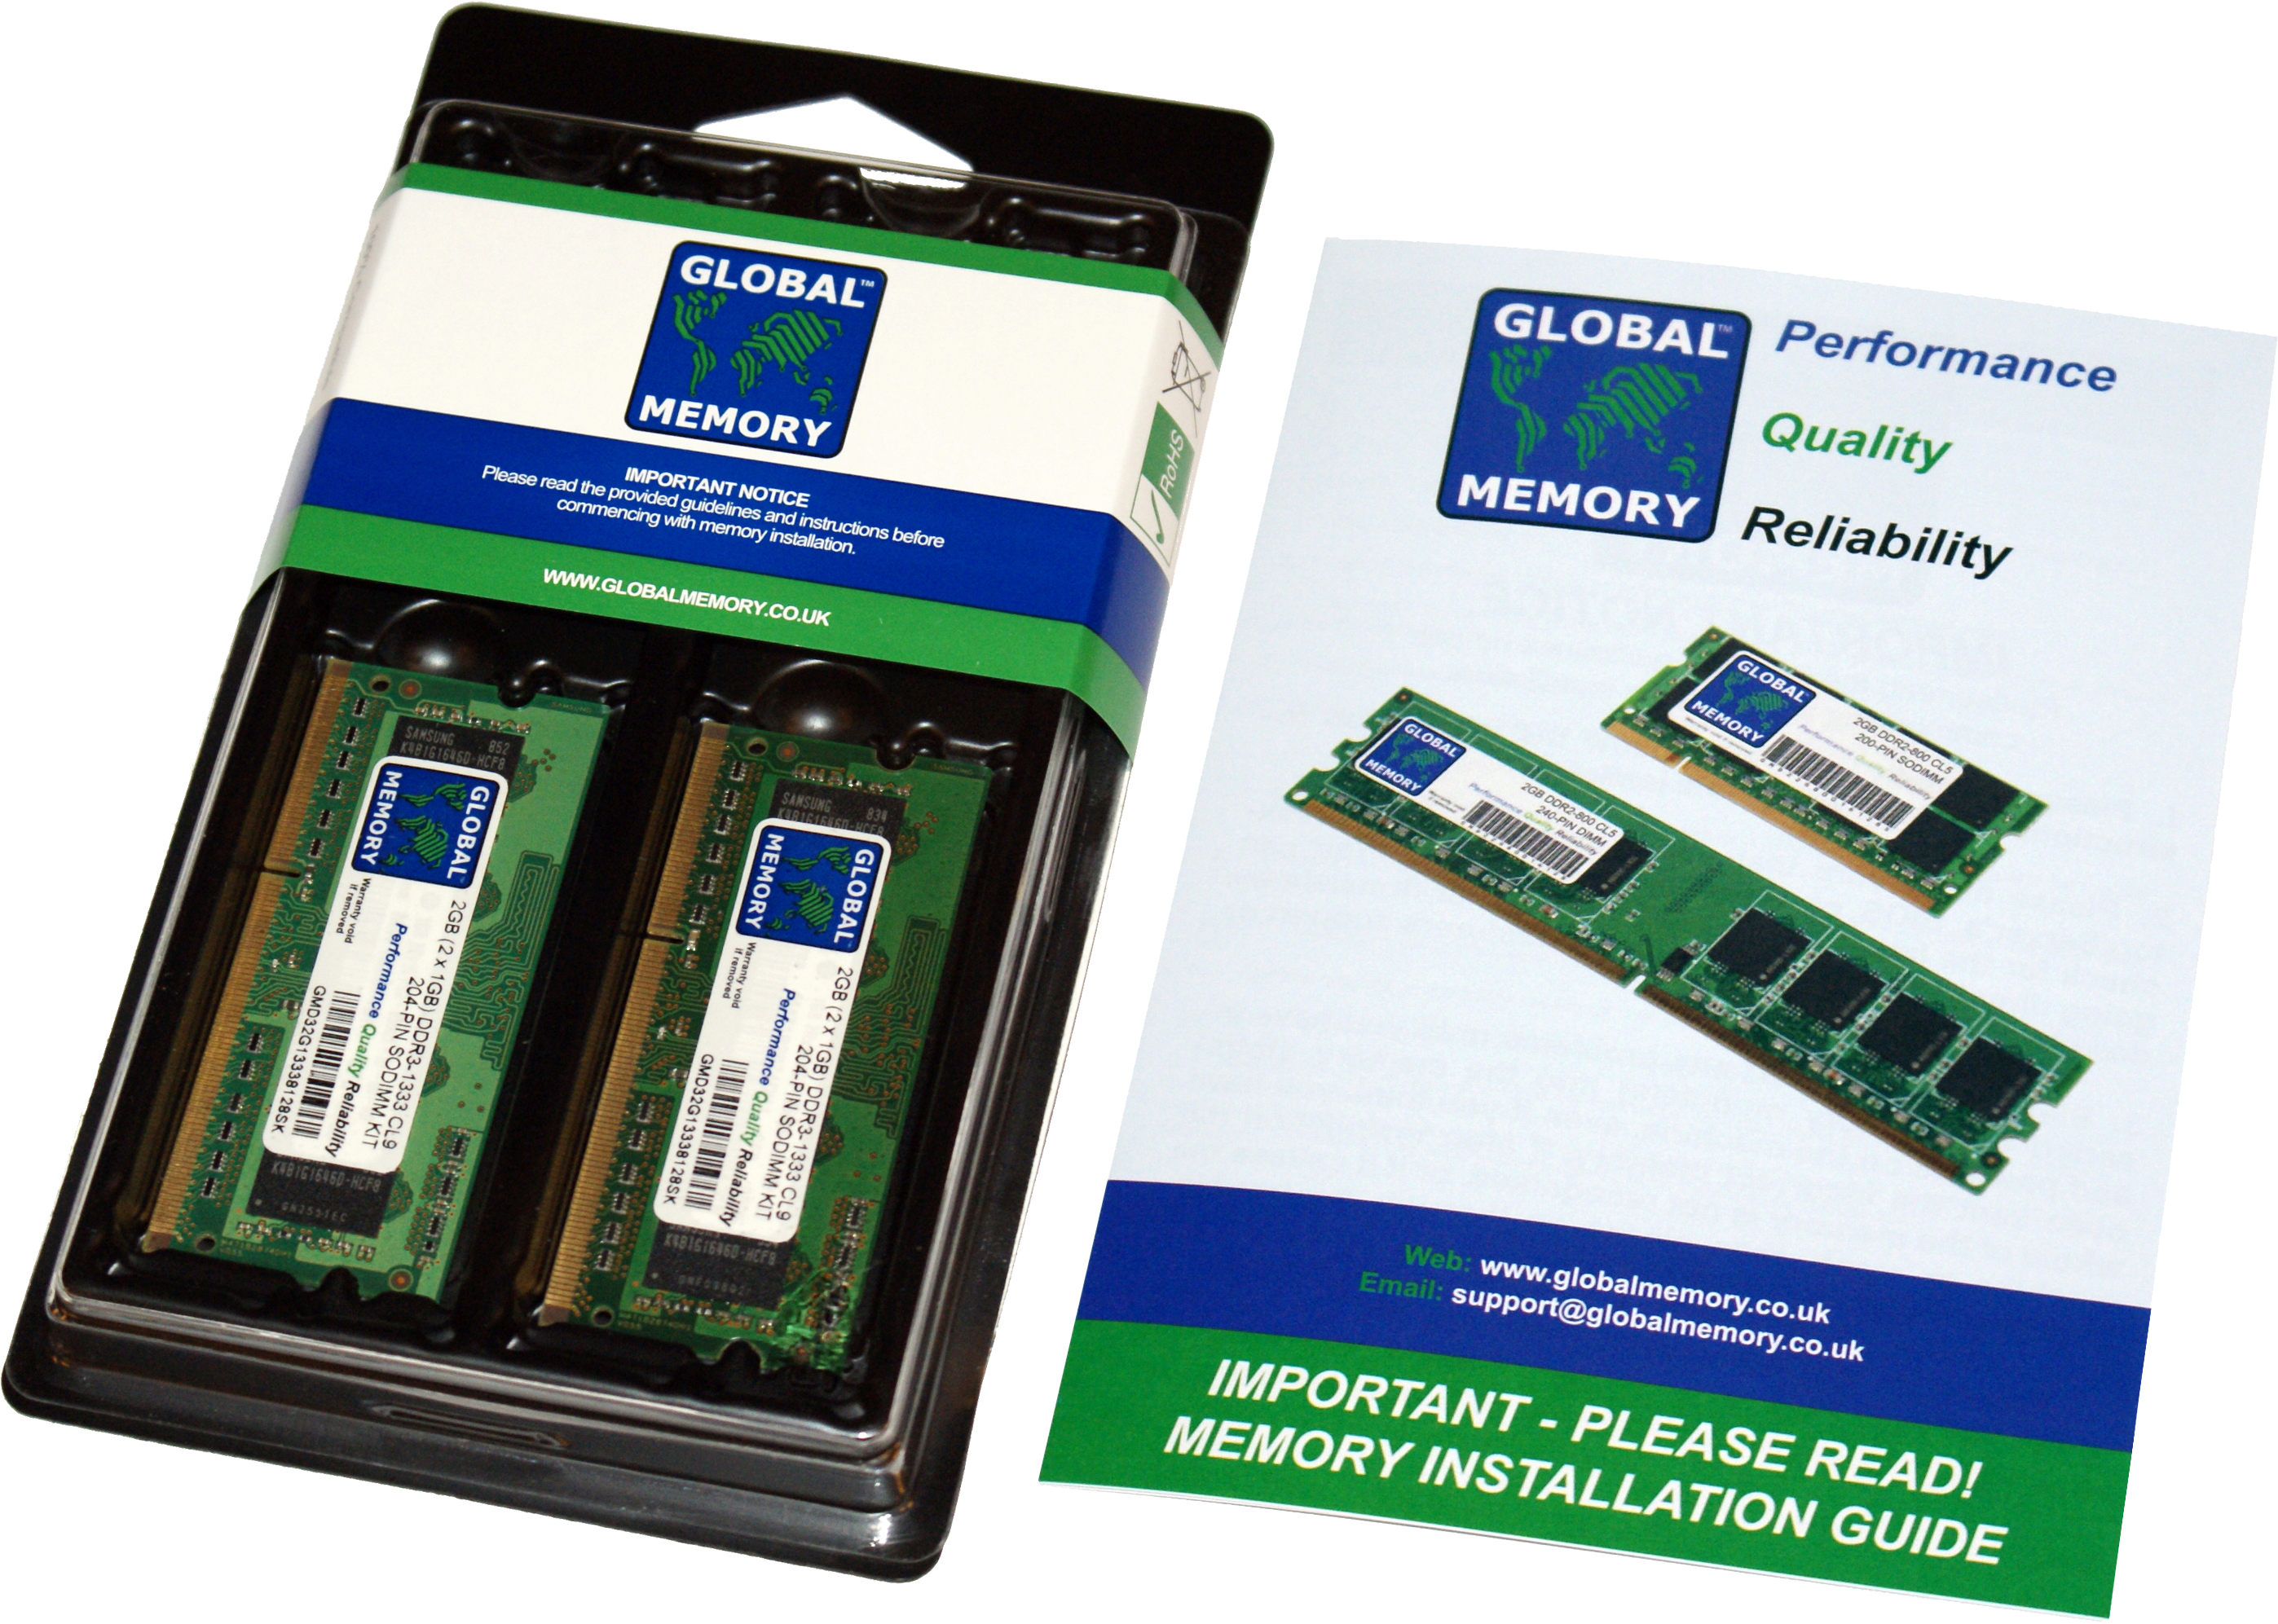 8GB (2 x 4GB) DDR4 2400MHz PC4-19200 260-PIN SODIMM MEMORY RAM KIT FOR DELL LAPTOPS/NOTEBOOKS